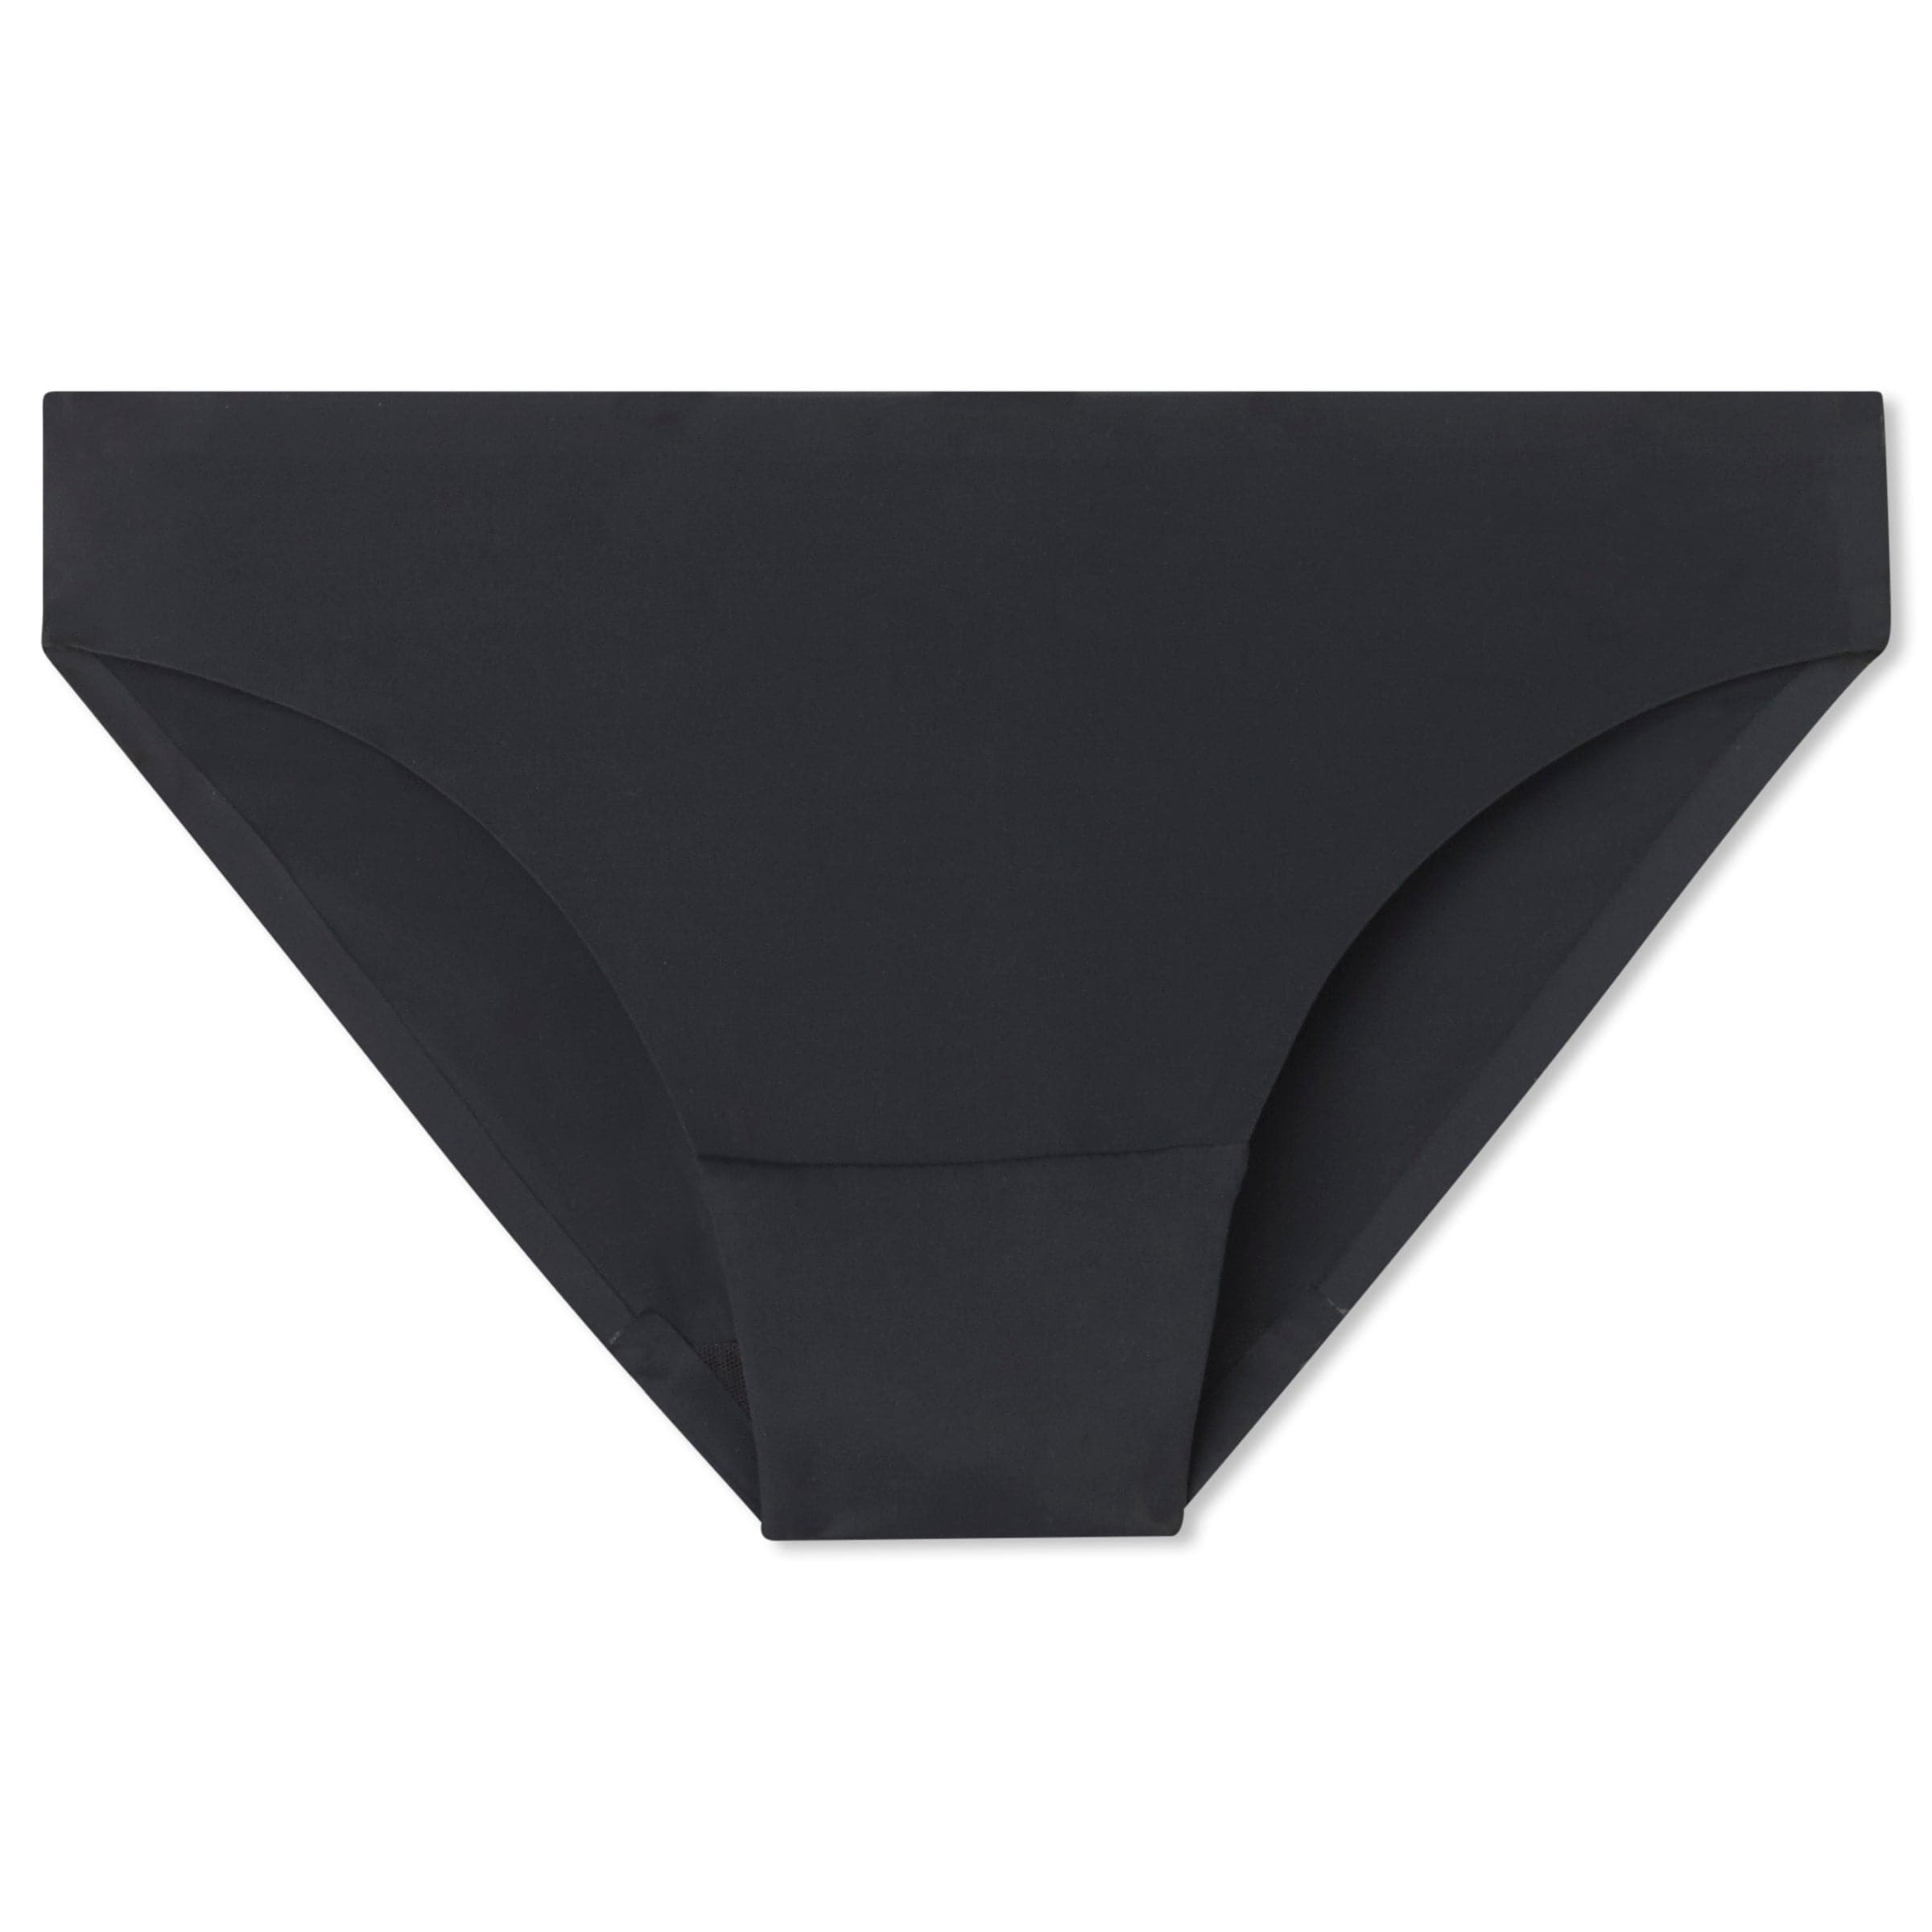 Women's Period Underwear - Bikini, Sapphire